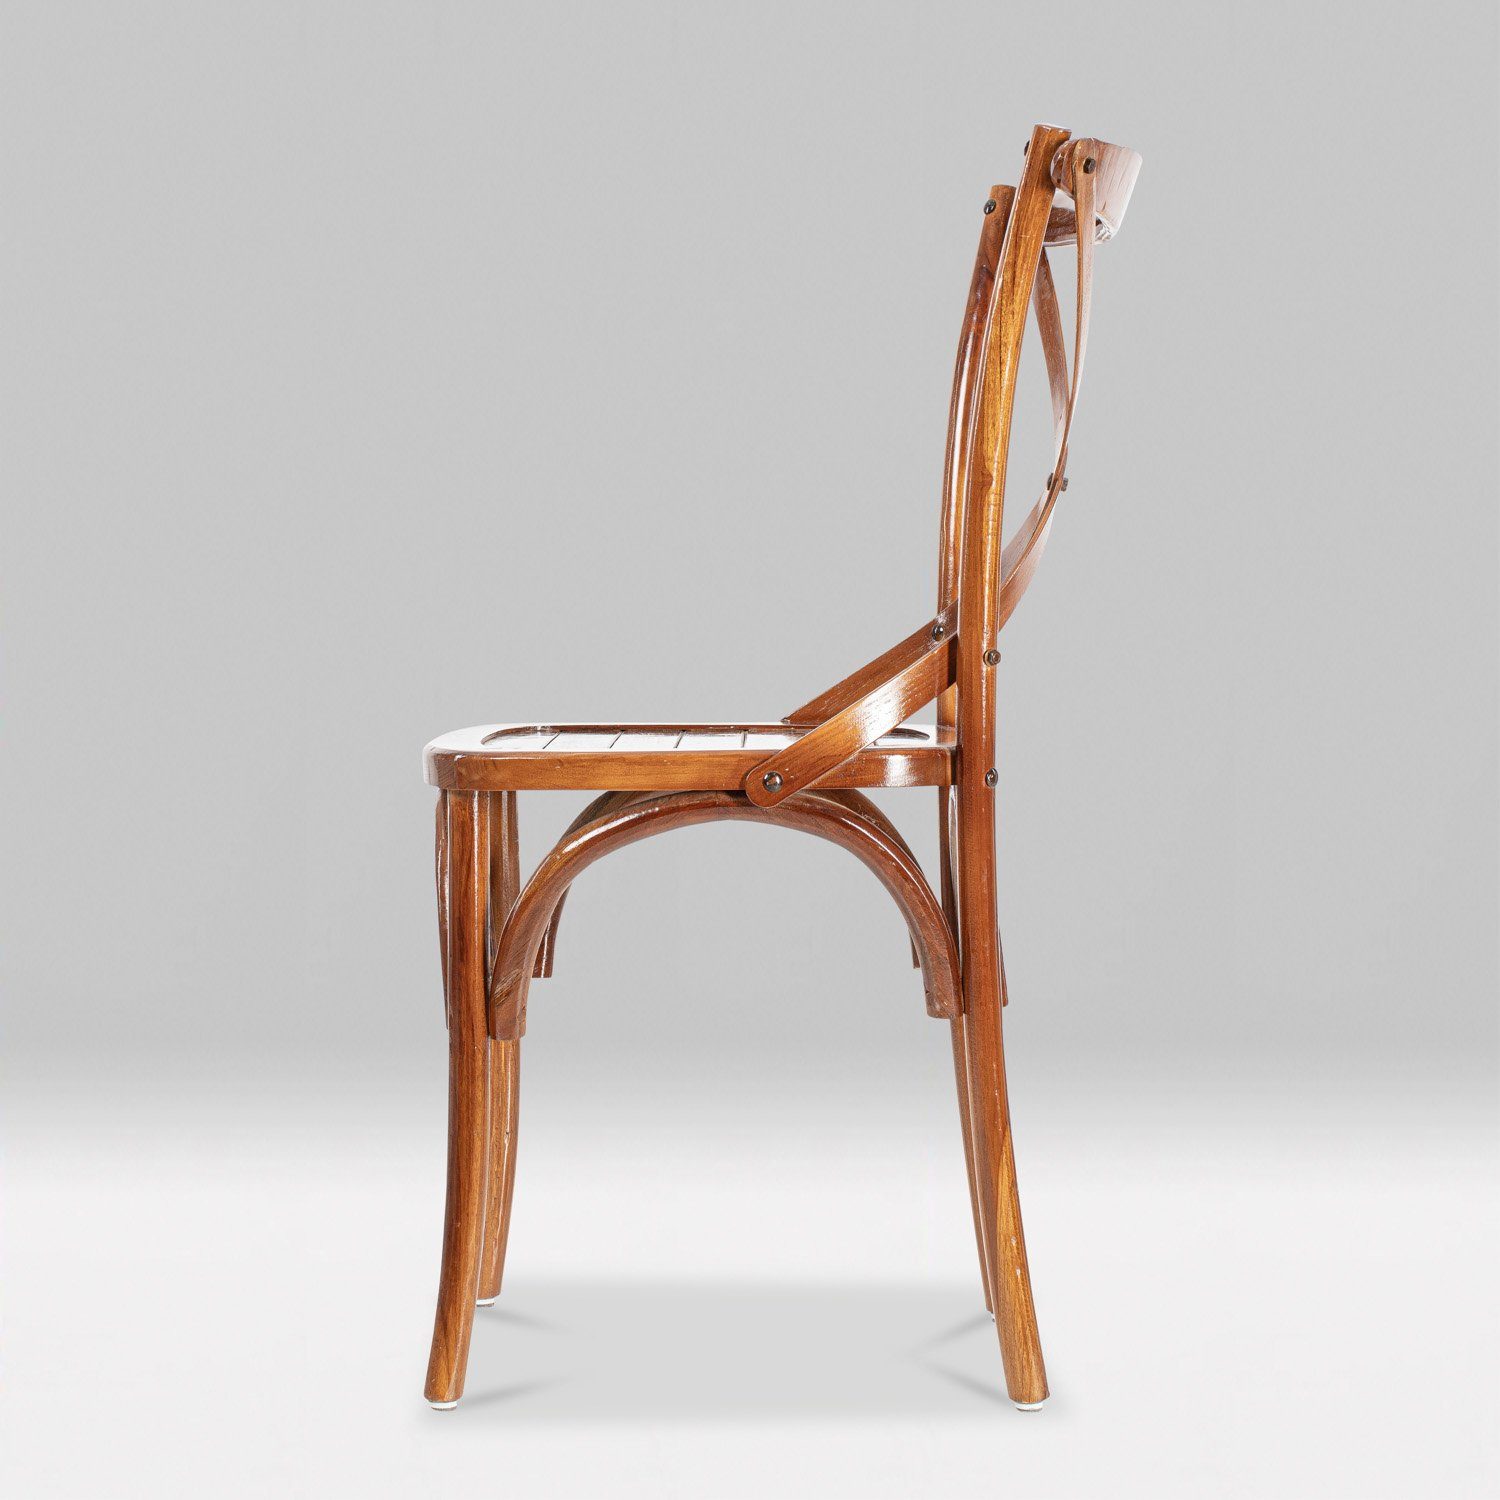 (1 Teakholz Holz Esszimmerstuhl Stuhl Küchenstuhl - St) aus NOSTALGIE Stuhl Vintage Rikmani Retro